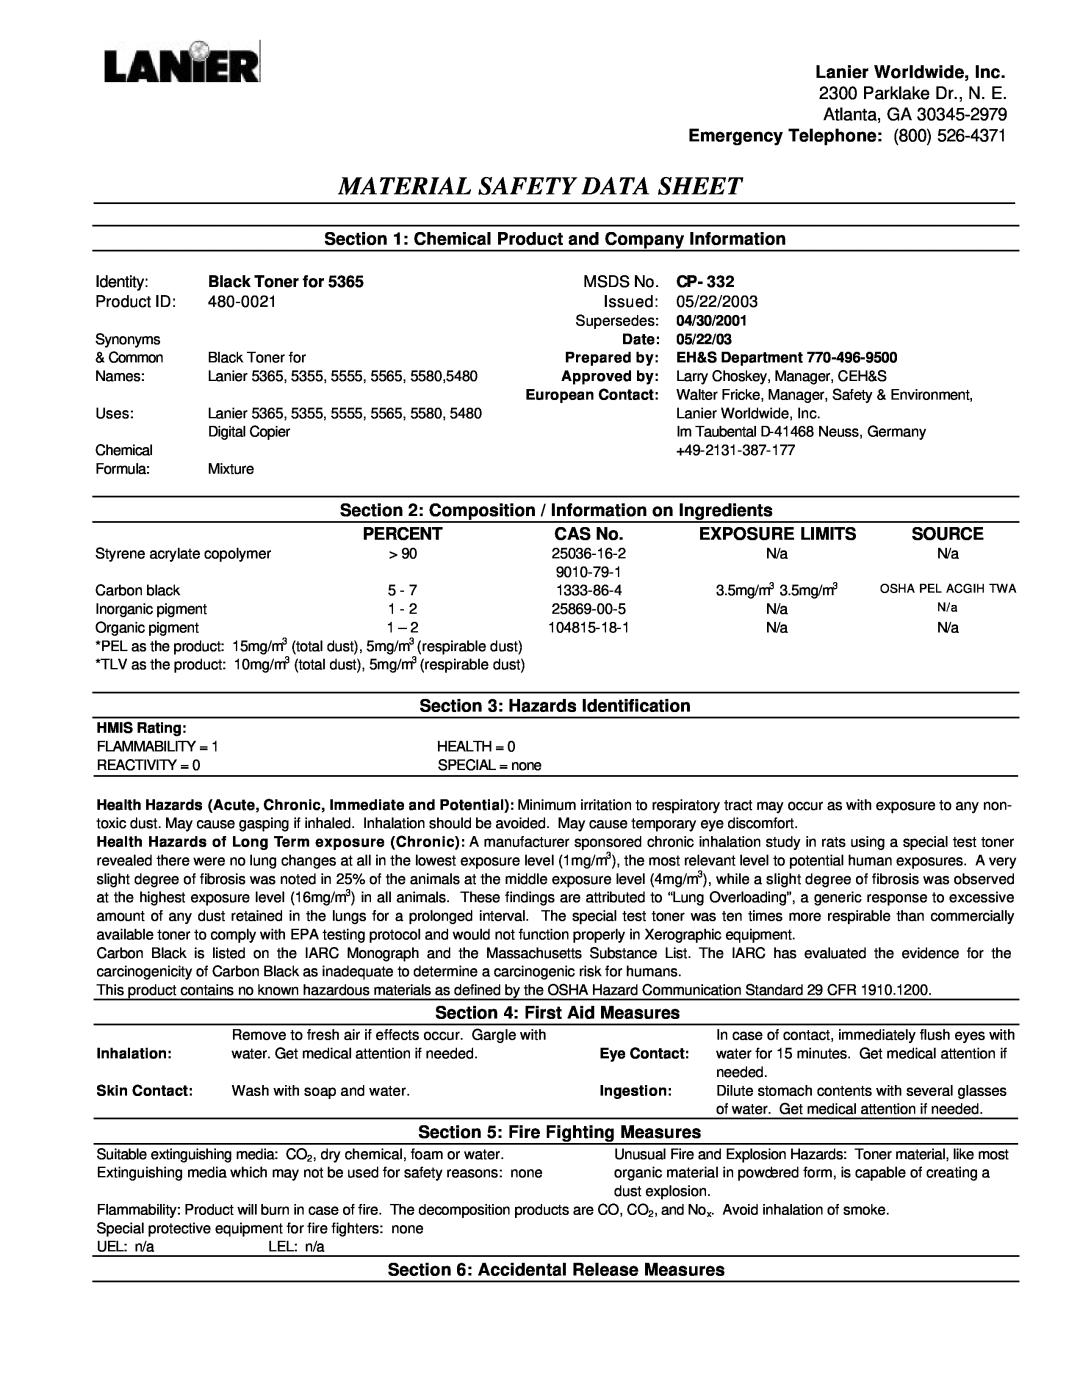 Lanier 5555, 5580, 5480, 5355, 480-0021, 5565 manual Material Safety Data Sheet 